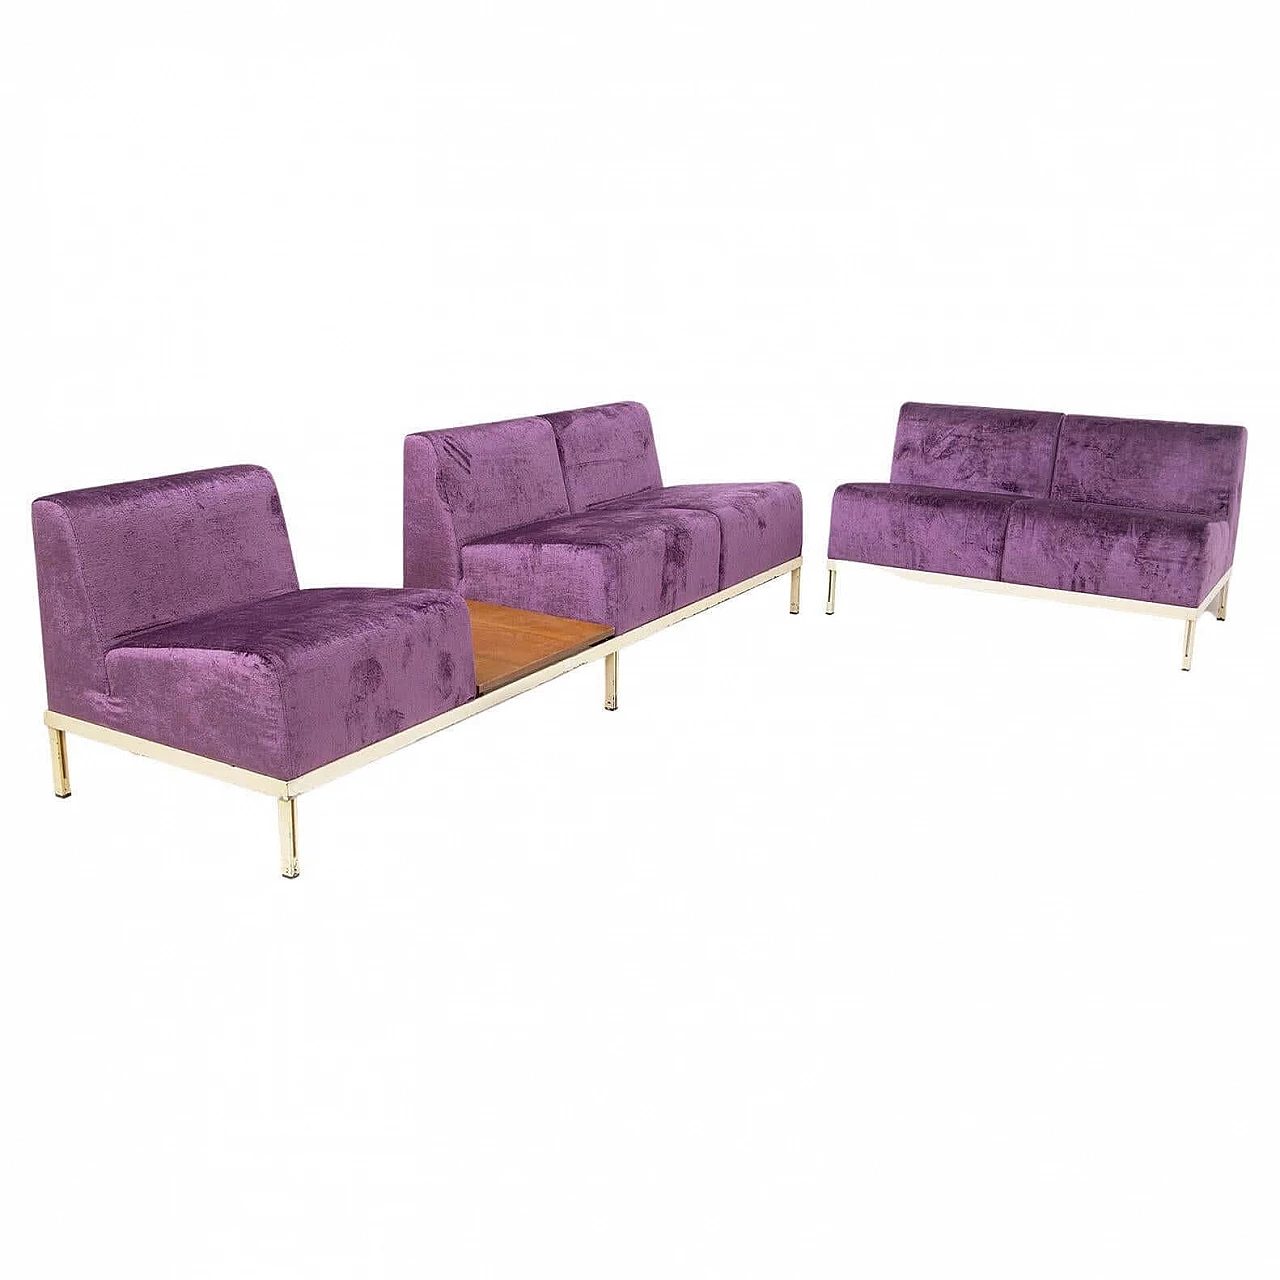 Pair of Gianfranco Frattini sofas in purple velvet, 1950s 1466281